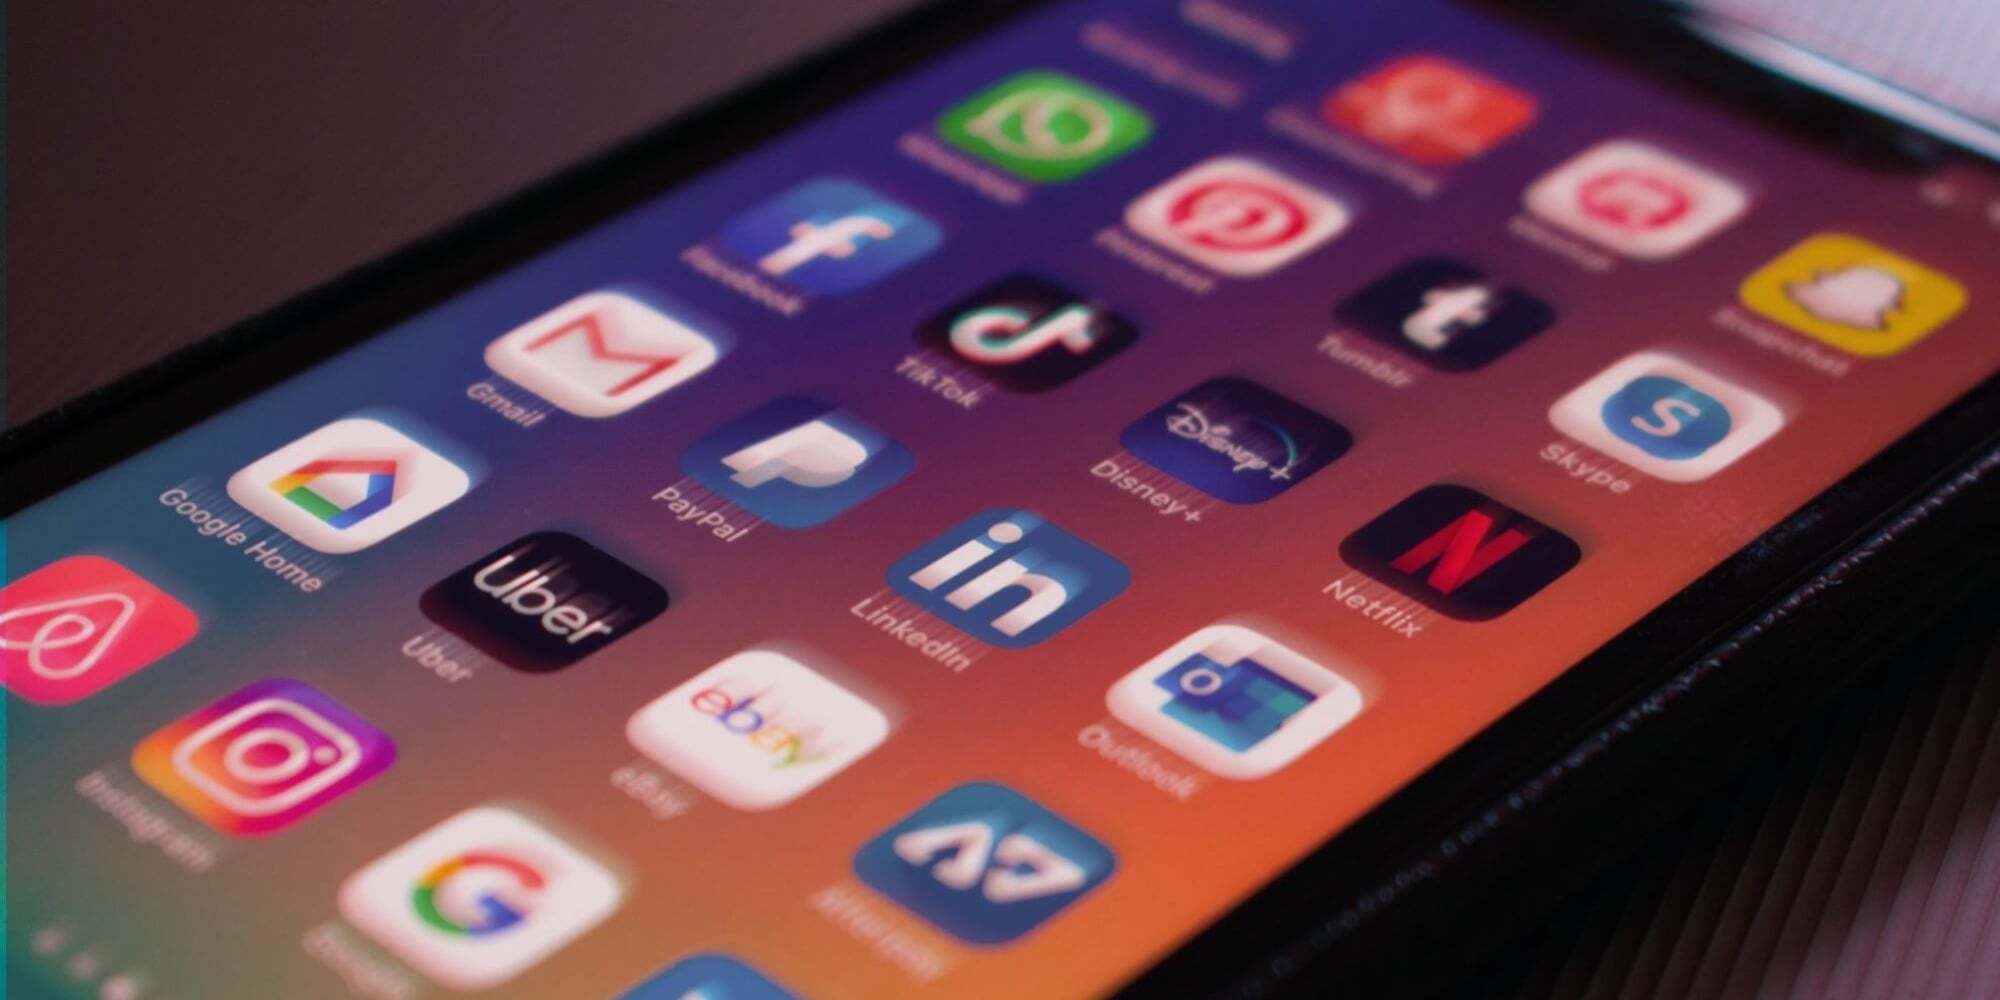 social media apps on phone